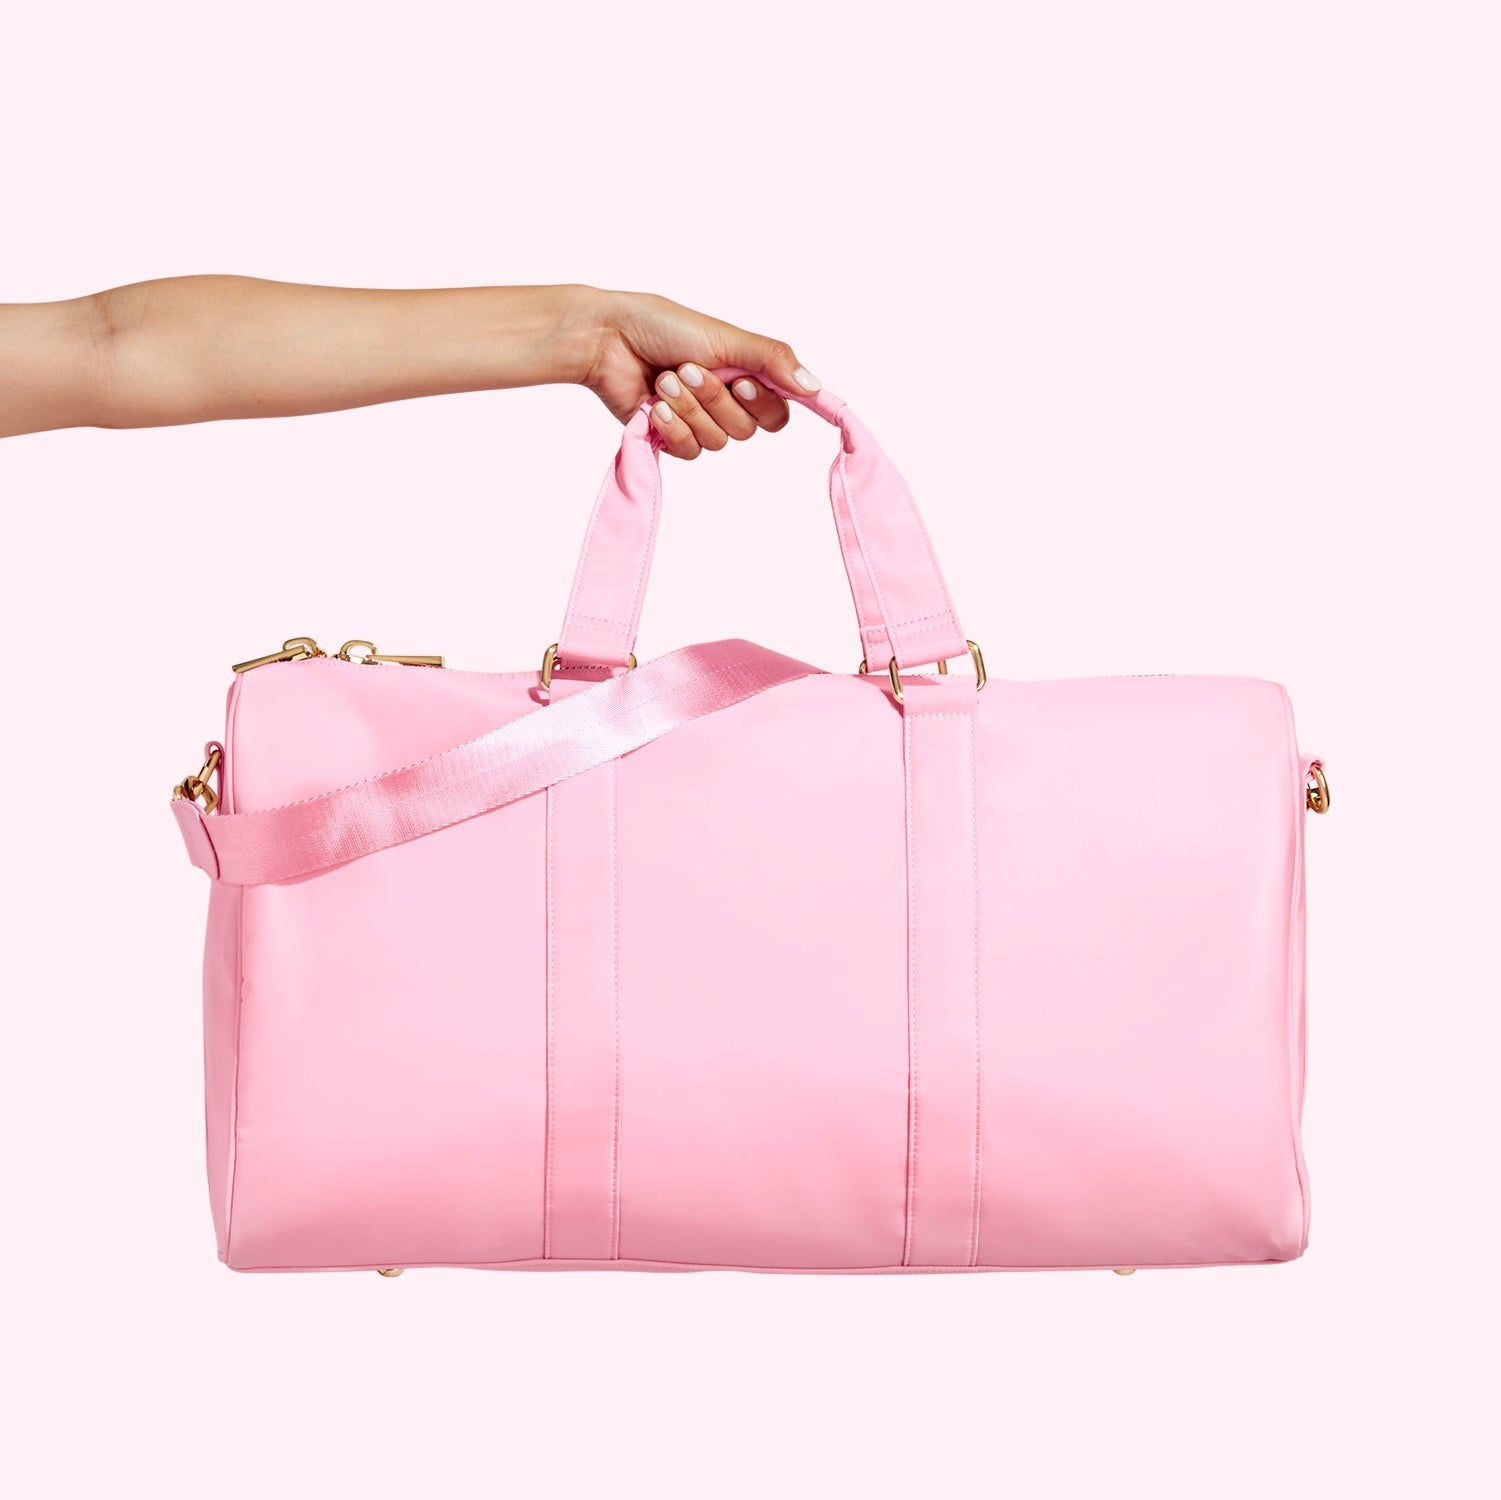 Bagheera - Quilted Duffle Bag - Hot Pink